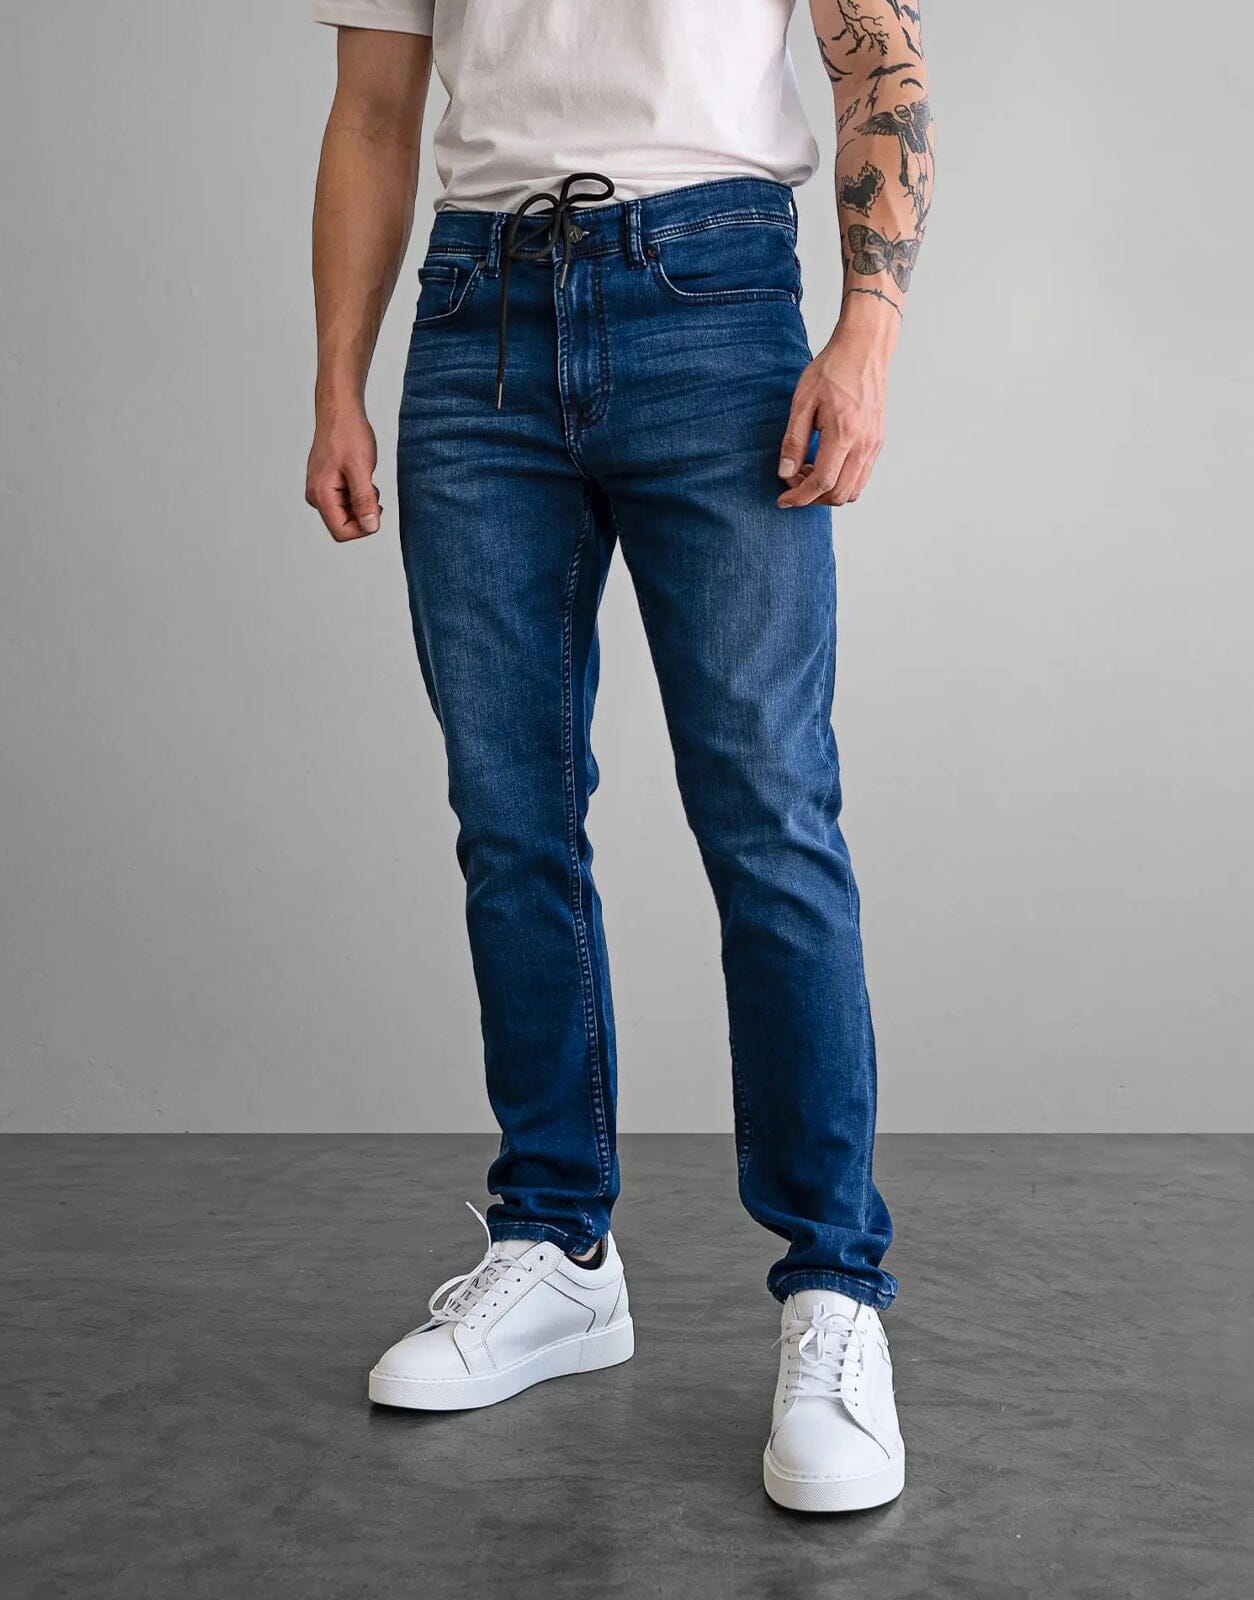 Fade Iconic Flow Blue Jeans - Subwear